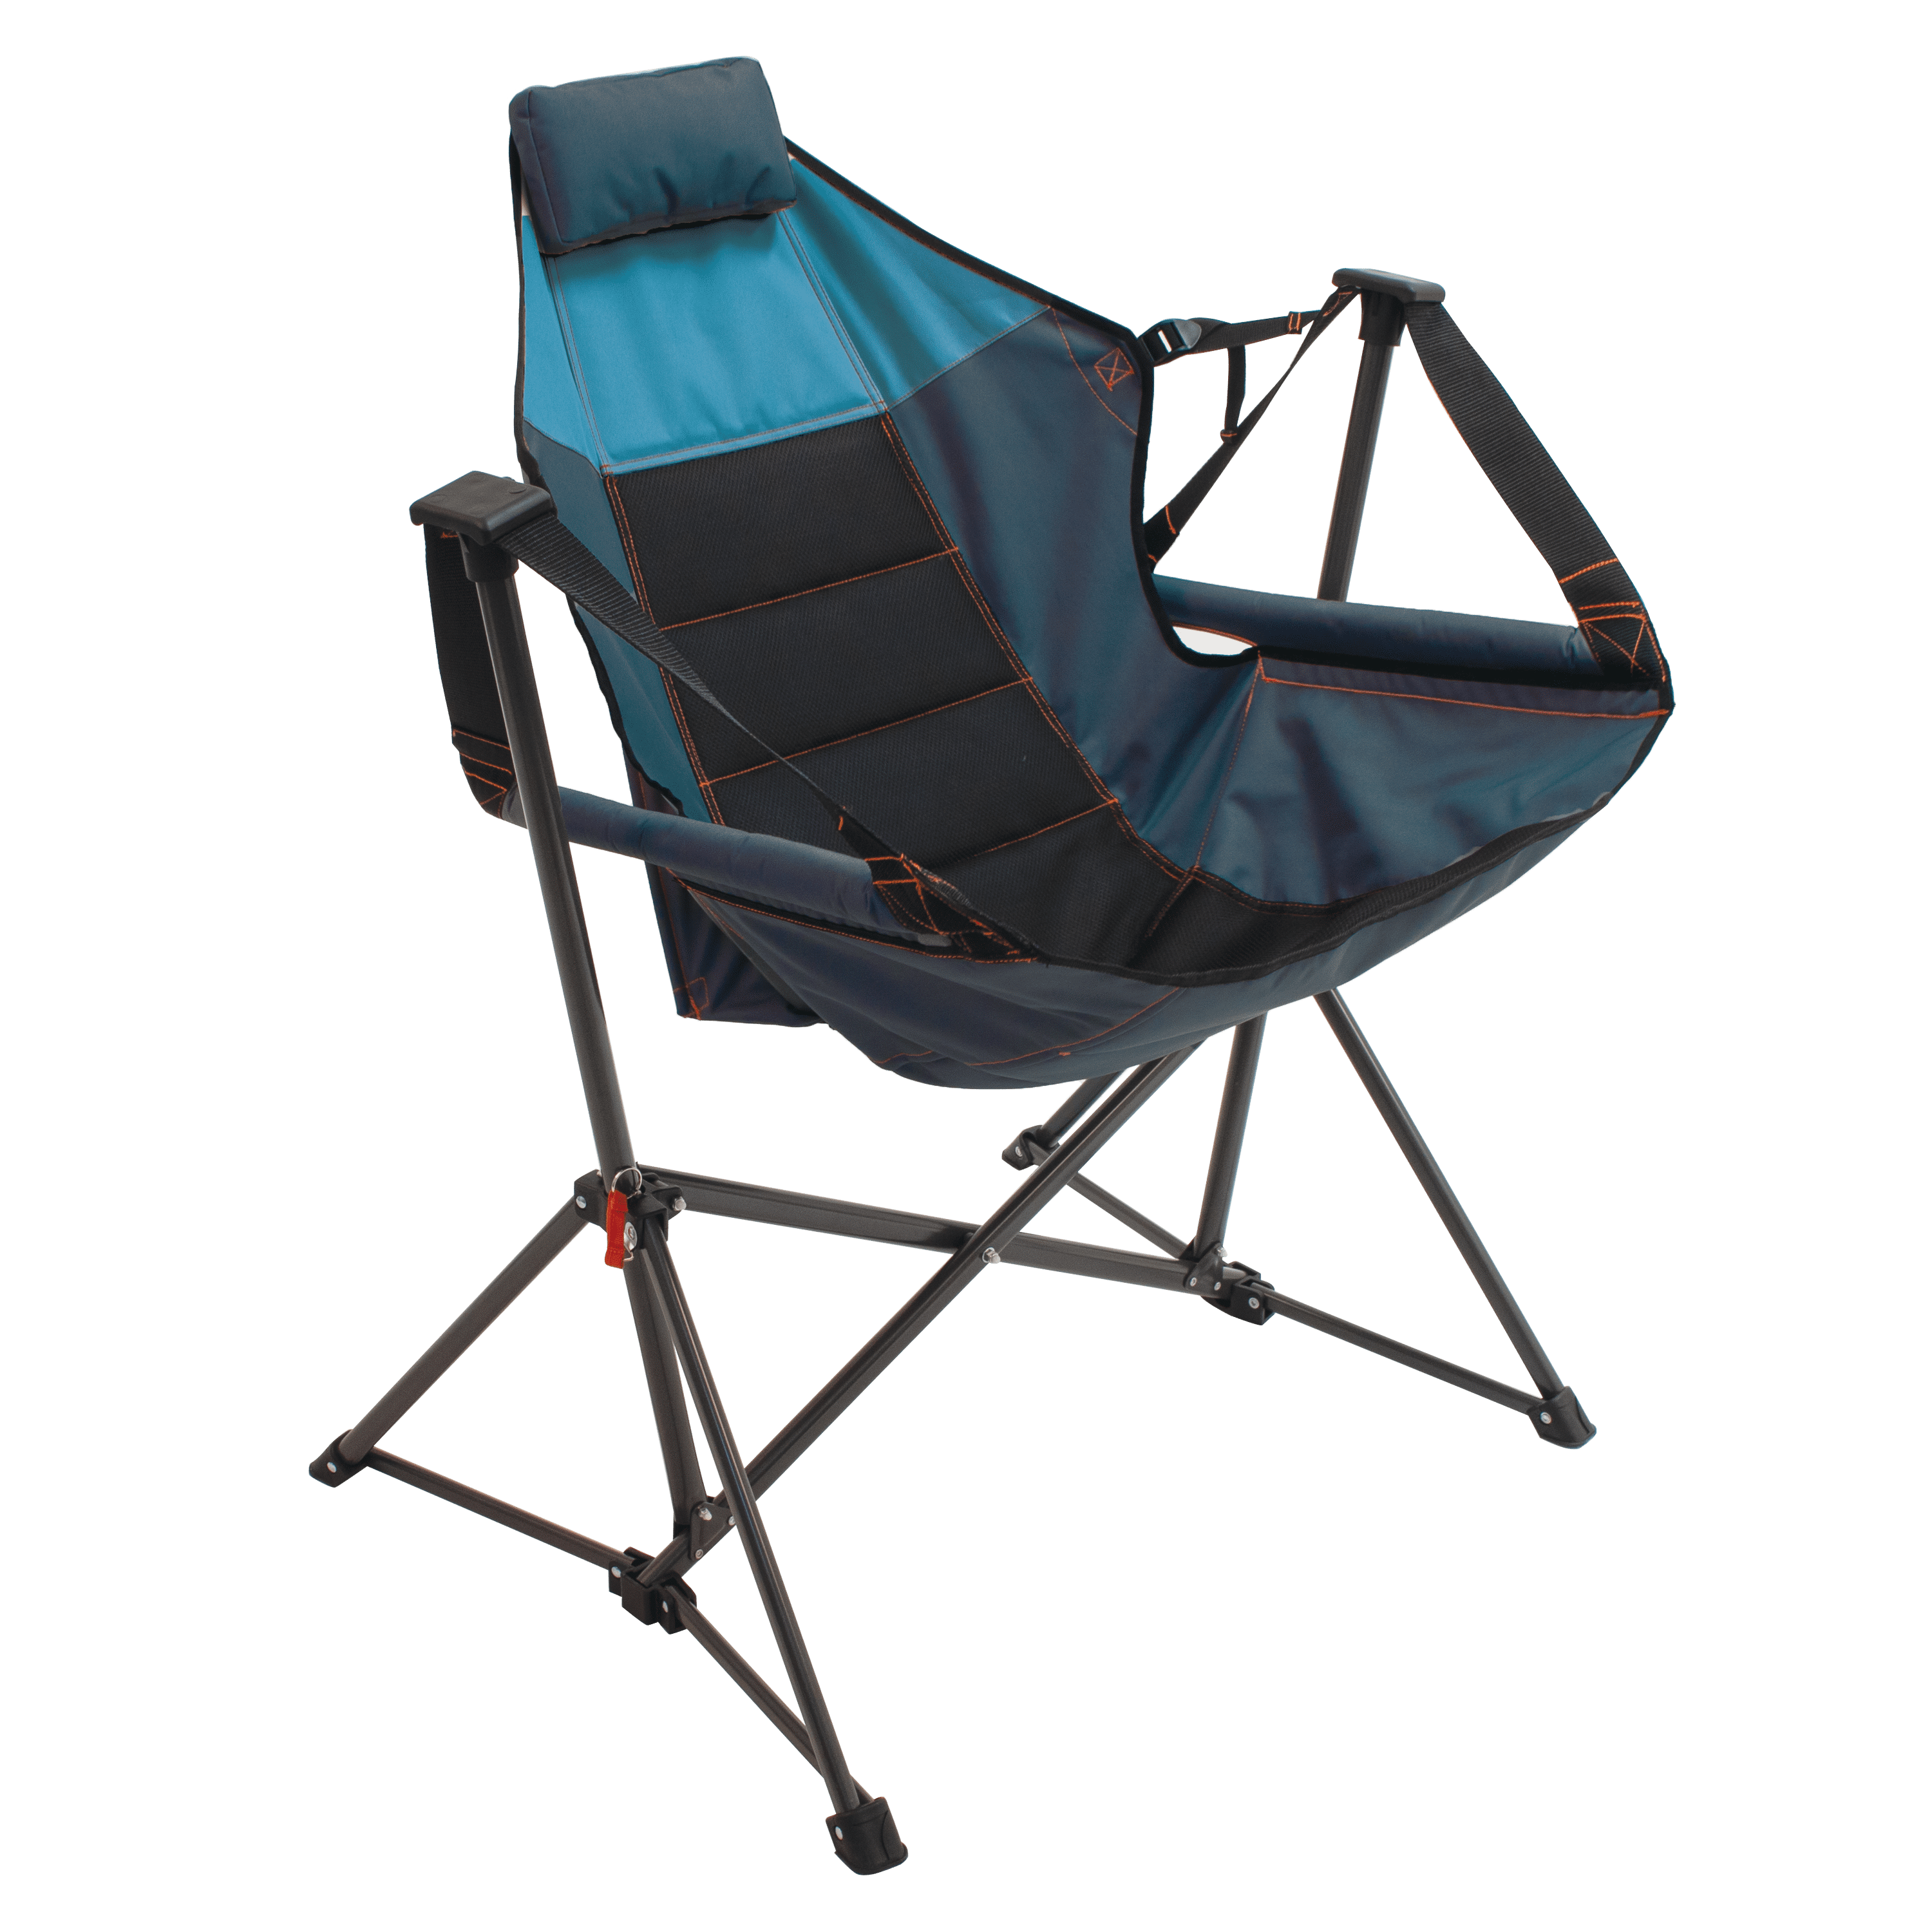 RIO Swing Hammock Chair Hammock Lounger Features a